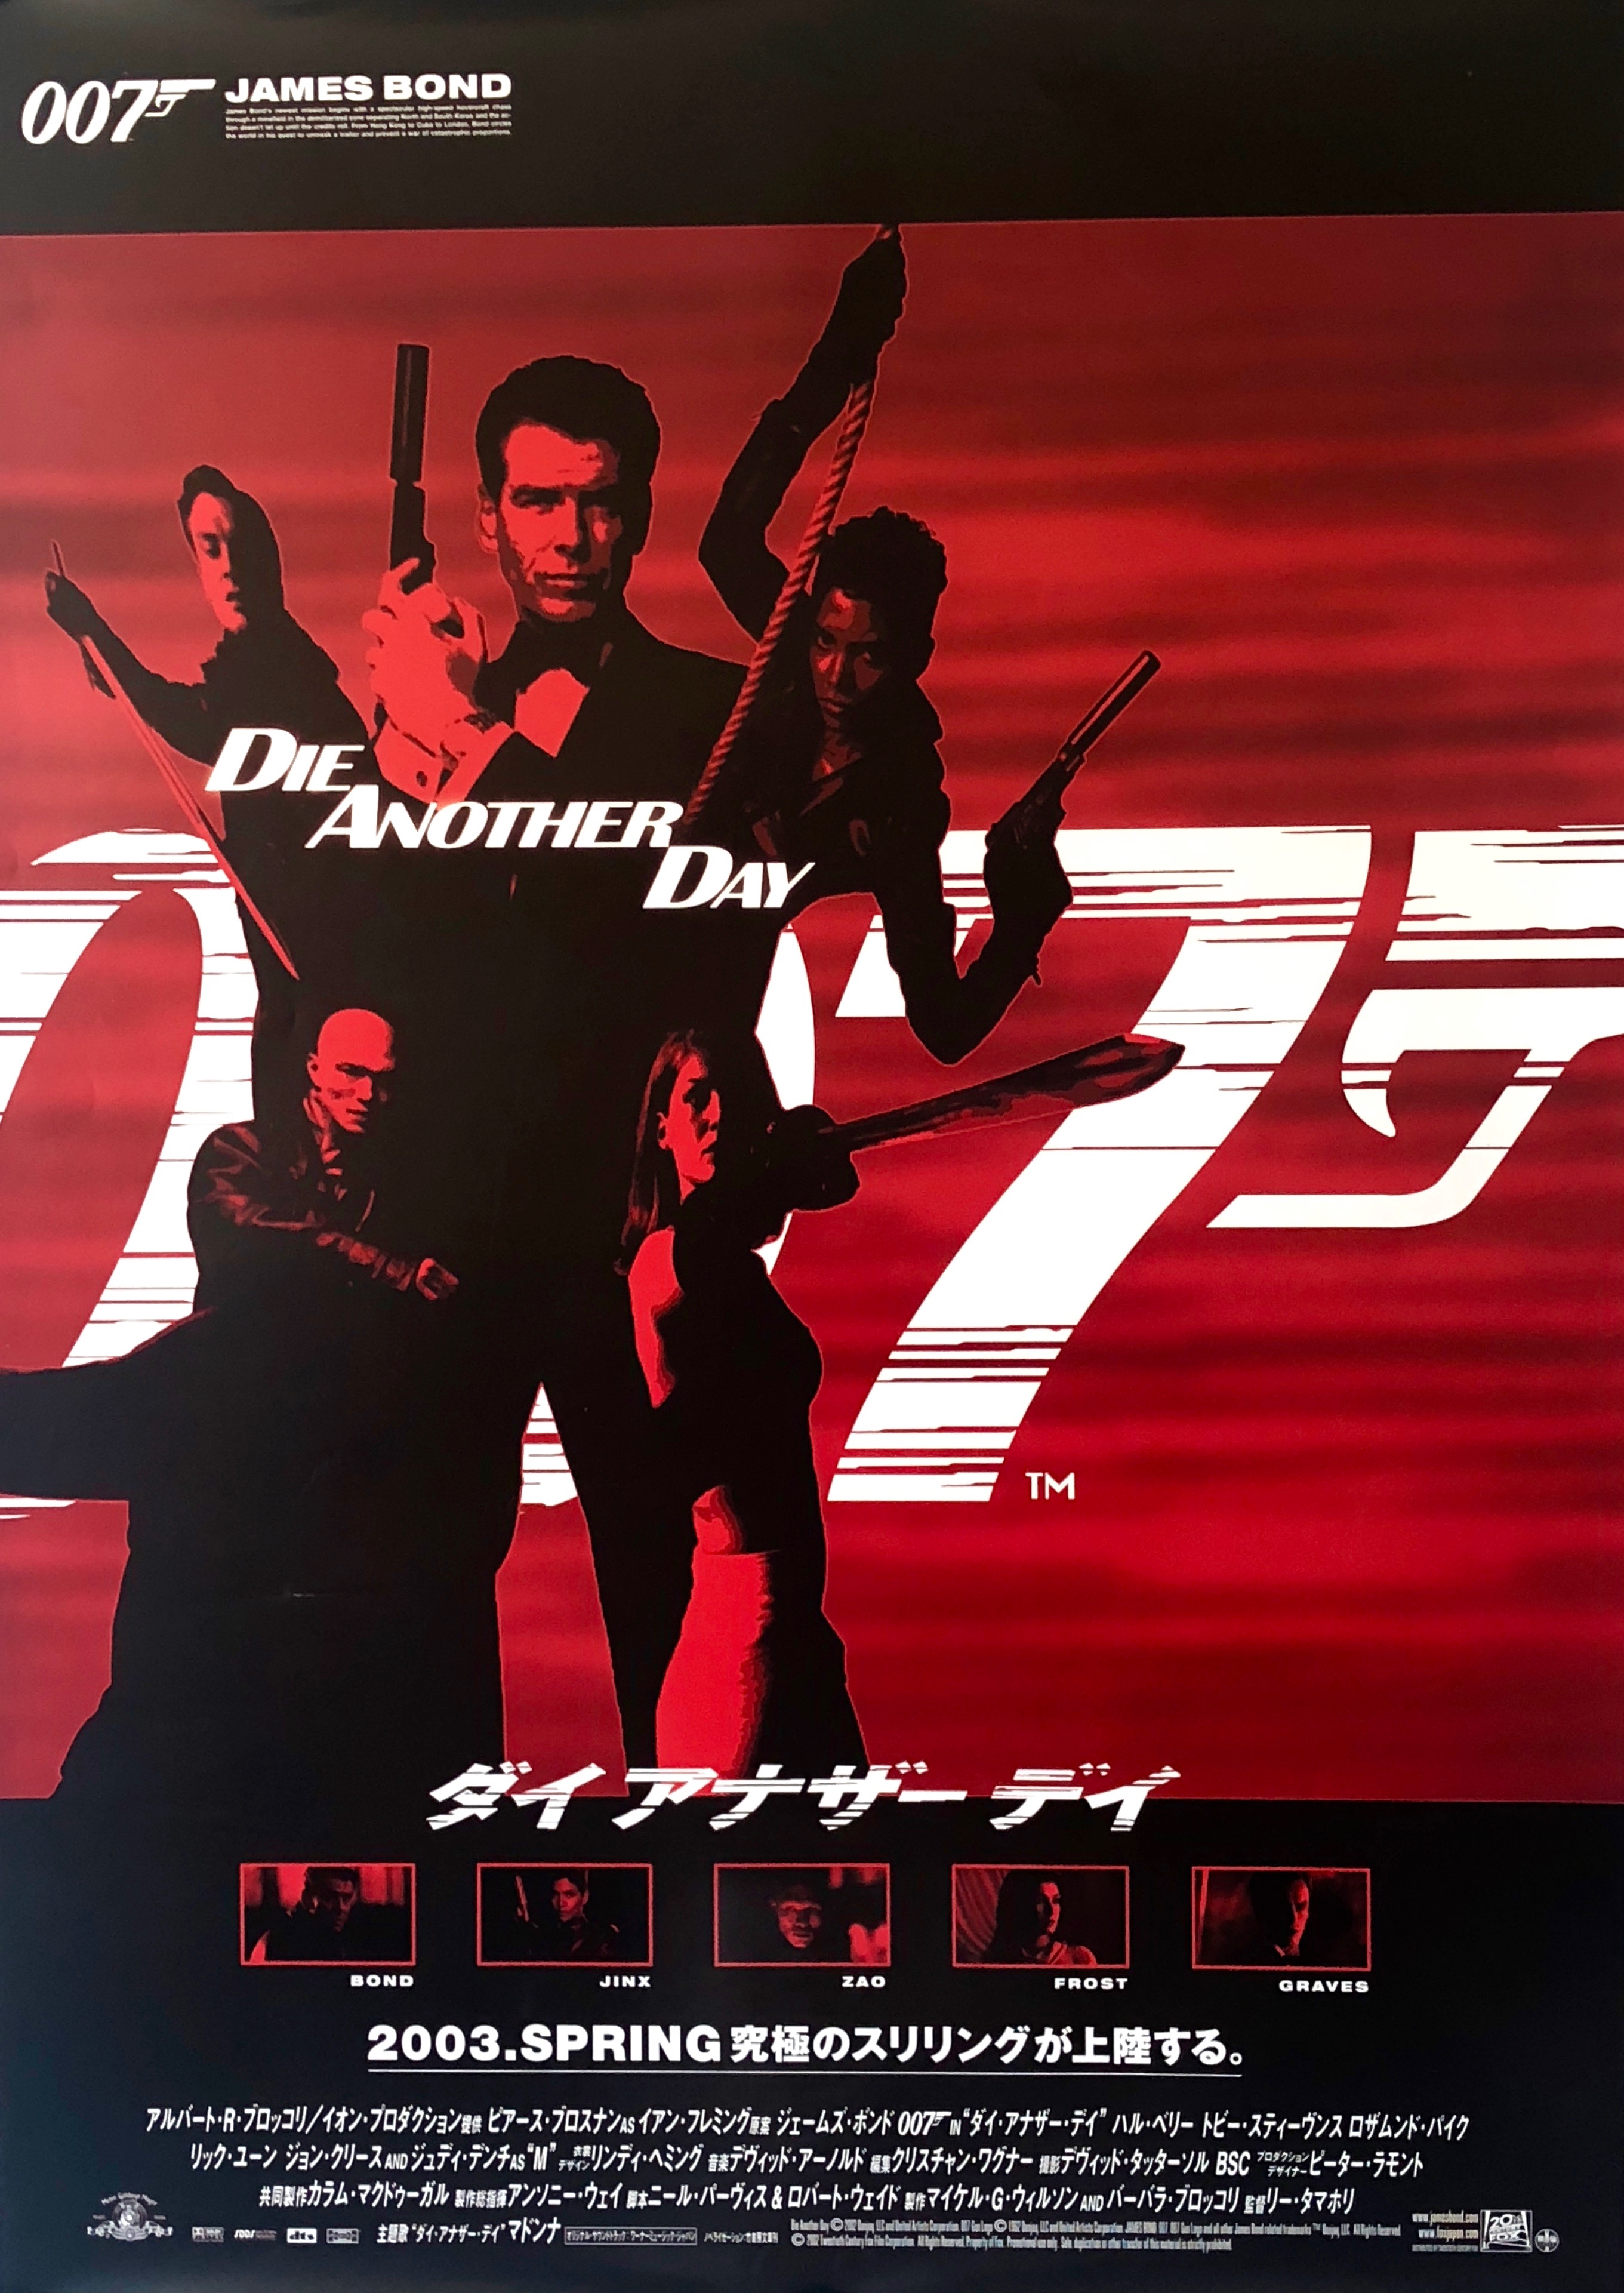 NEW DIE ANOTHER DAY 007 JAMES BOND FILM ORIGINAL CINEMA ART PRINT PREMIUM POSTER